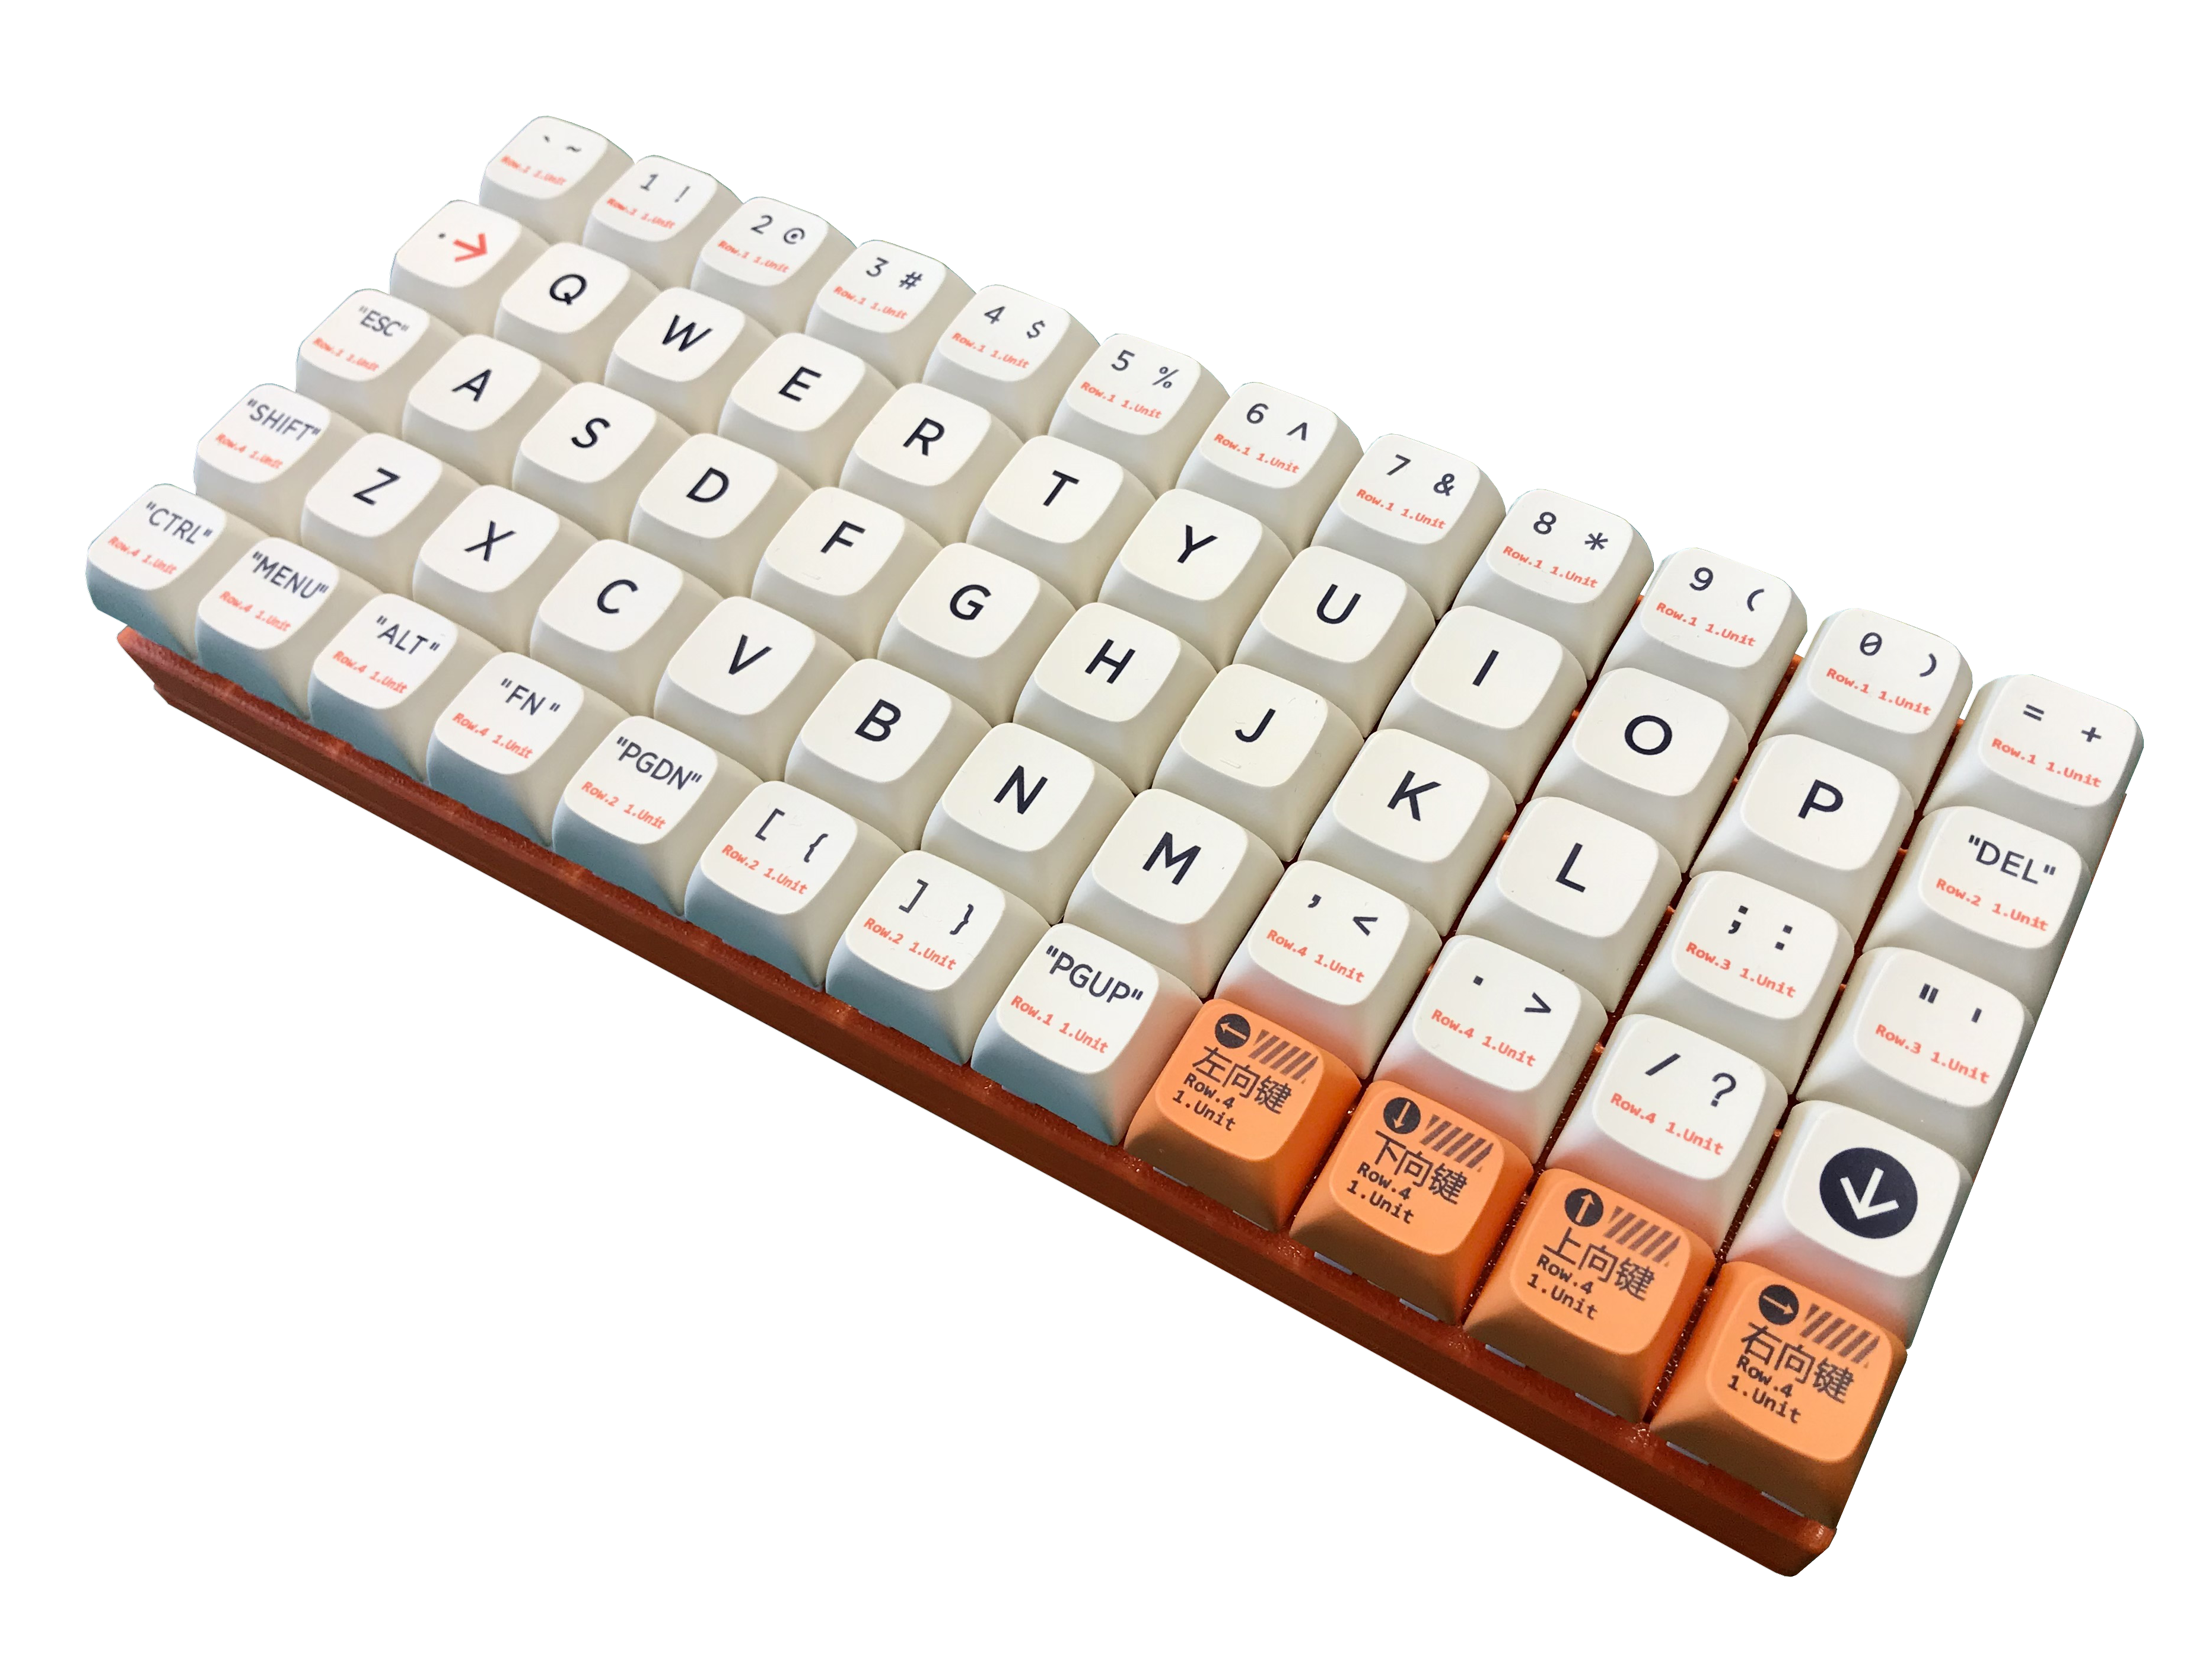 Cyberdeck Ortholinear Keyboard